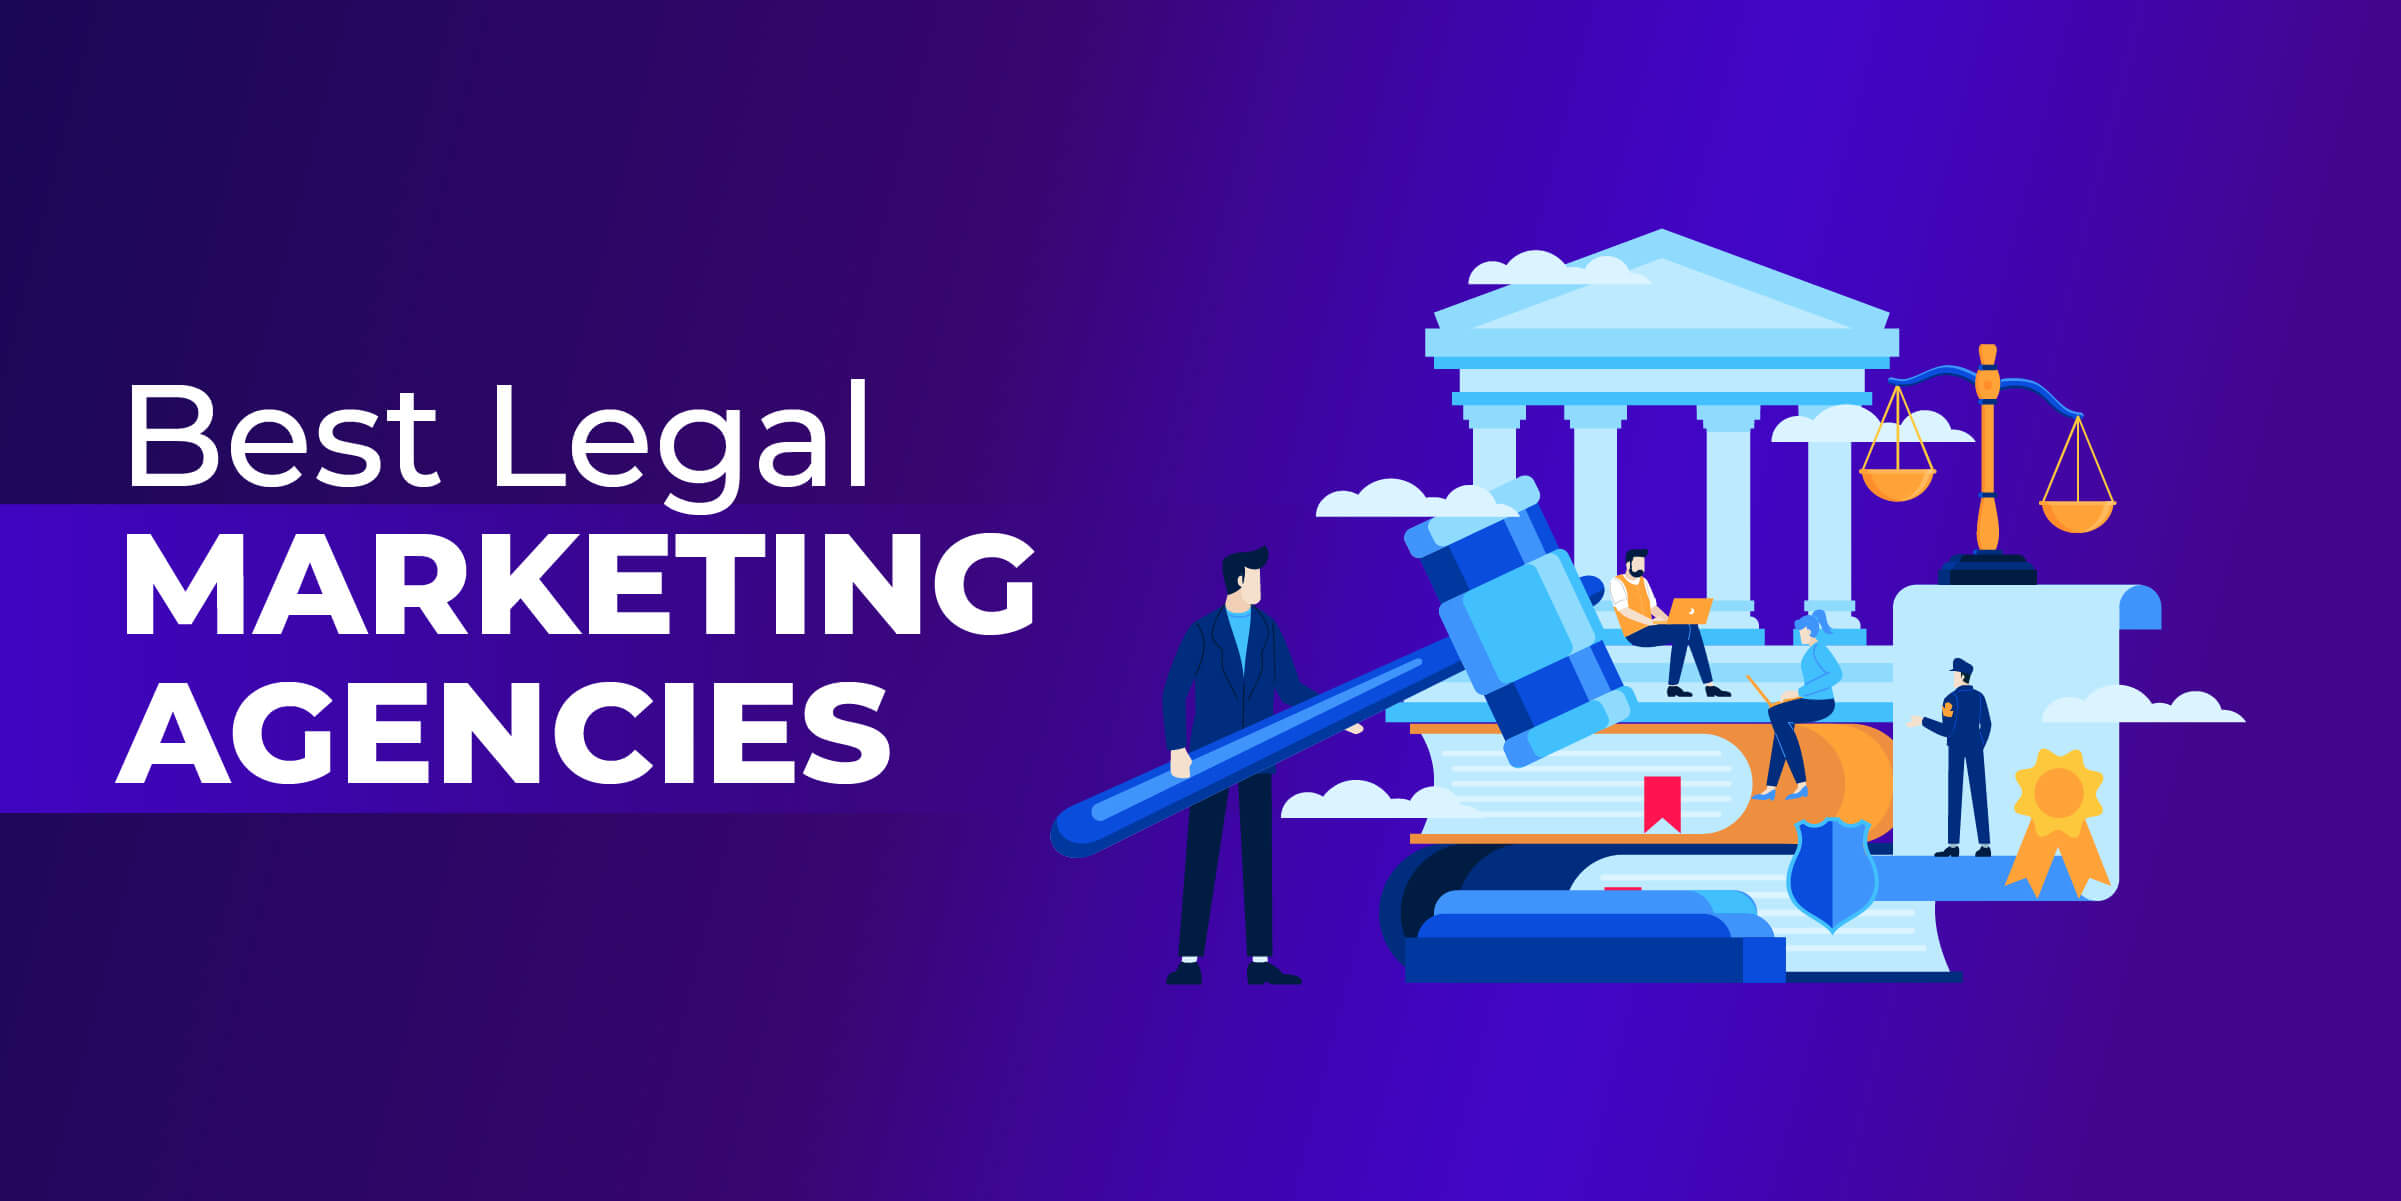 Best Legal Marketing Agencies